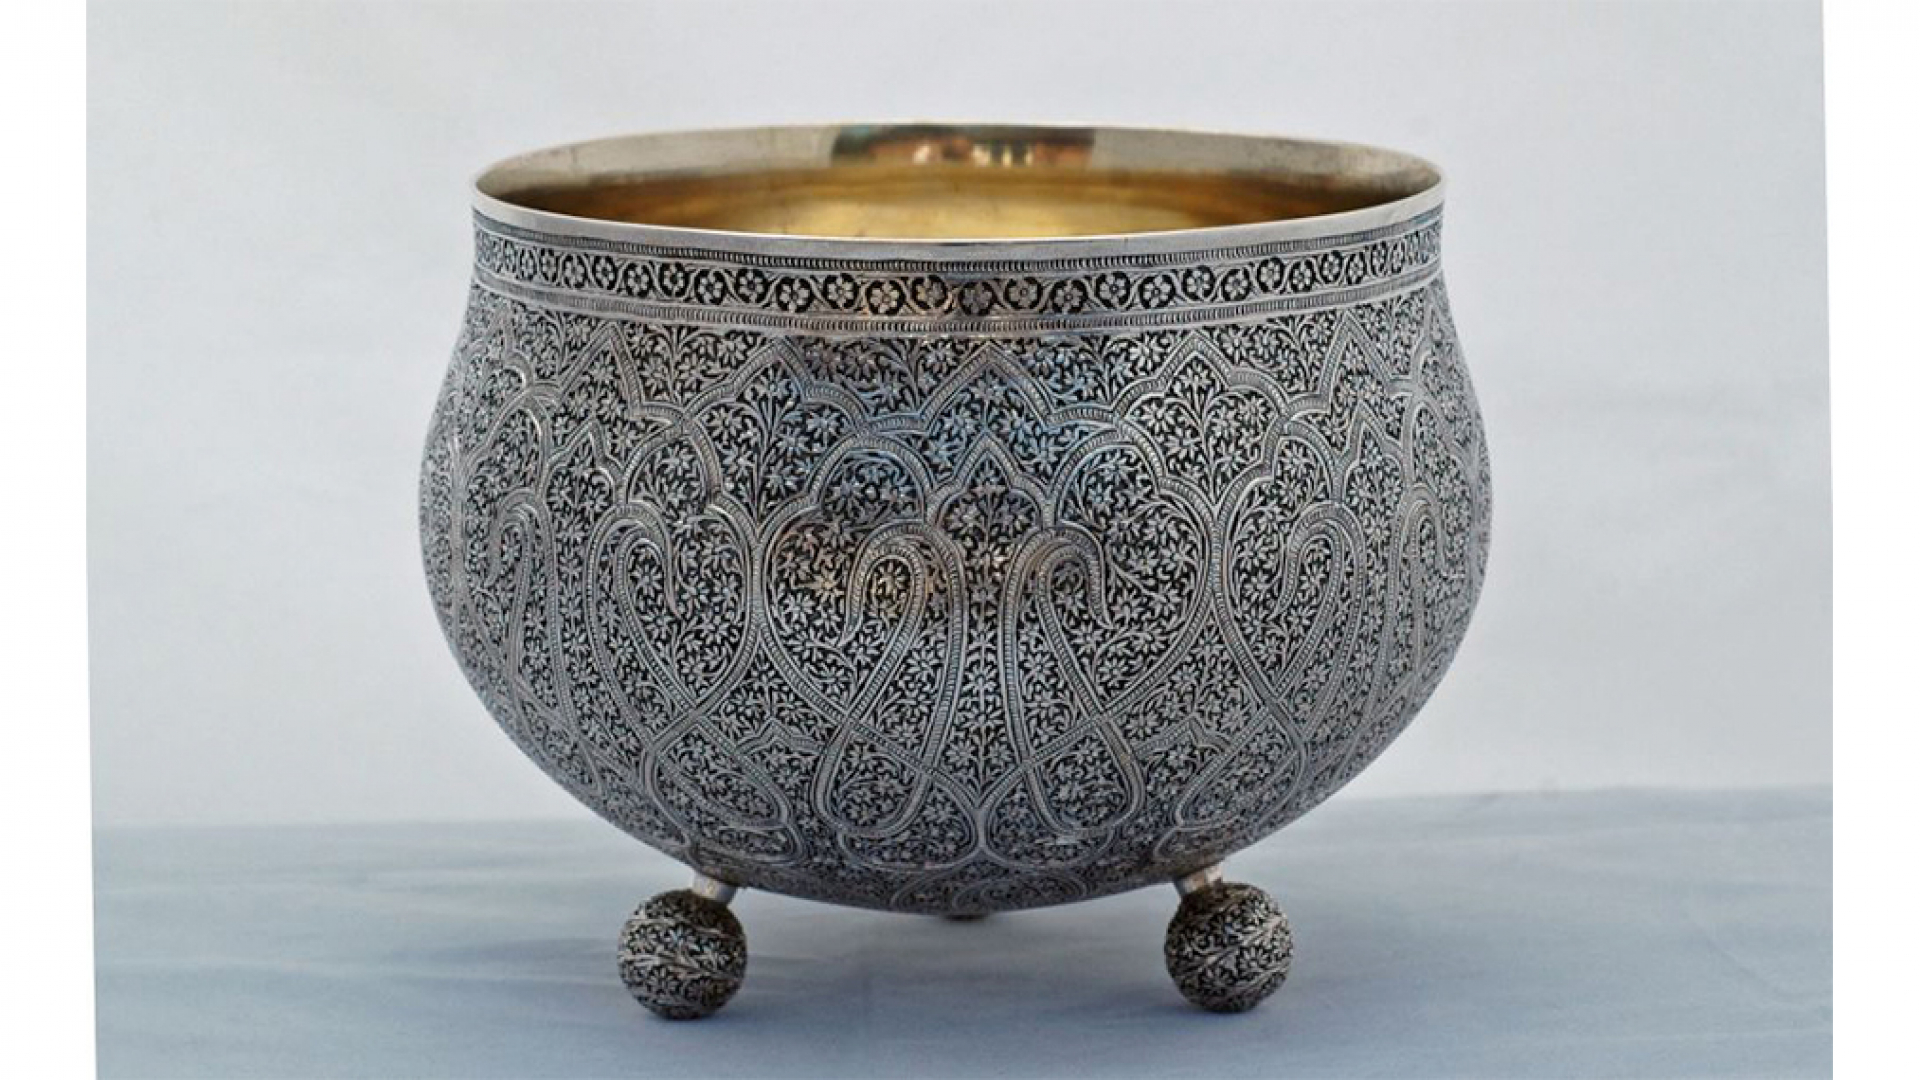 Decorative bowl with shawl pattern.